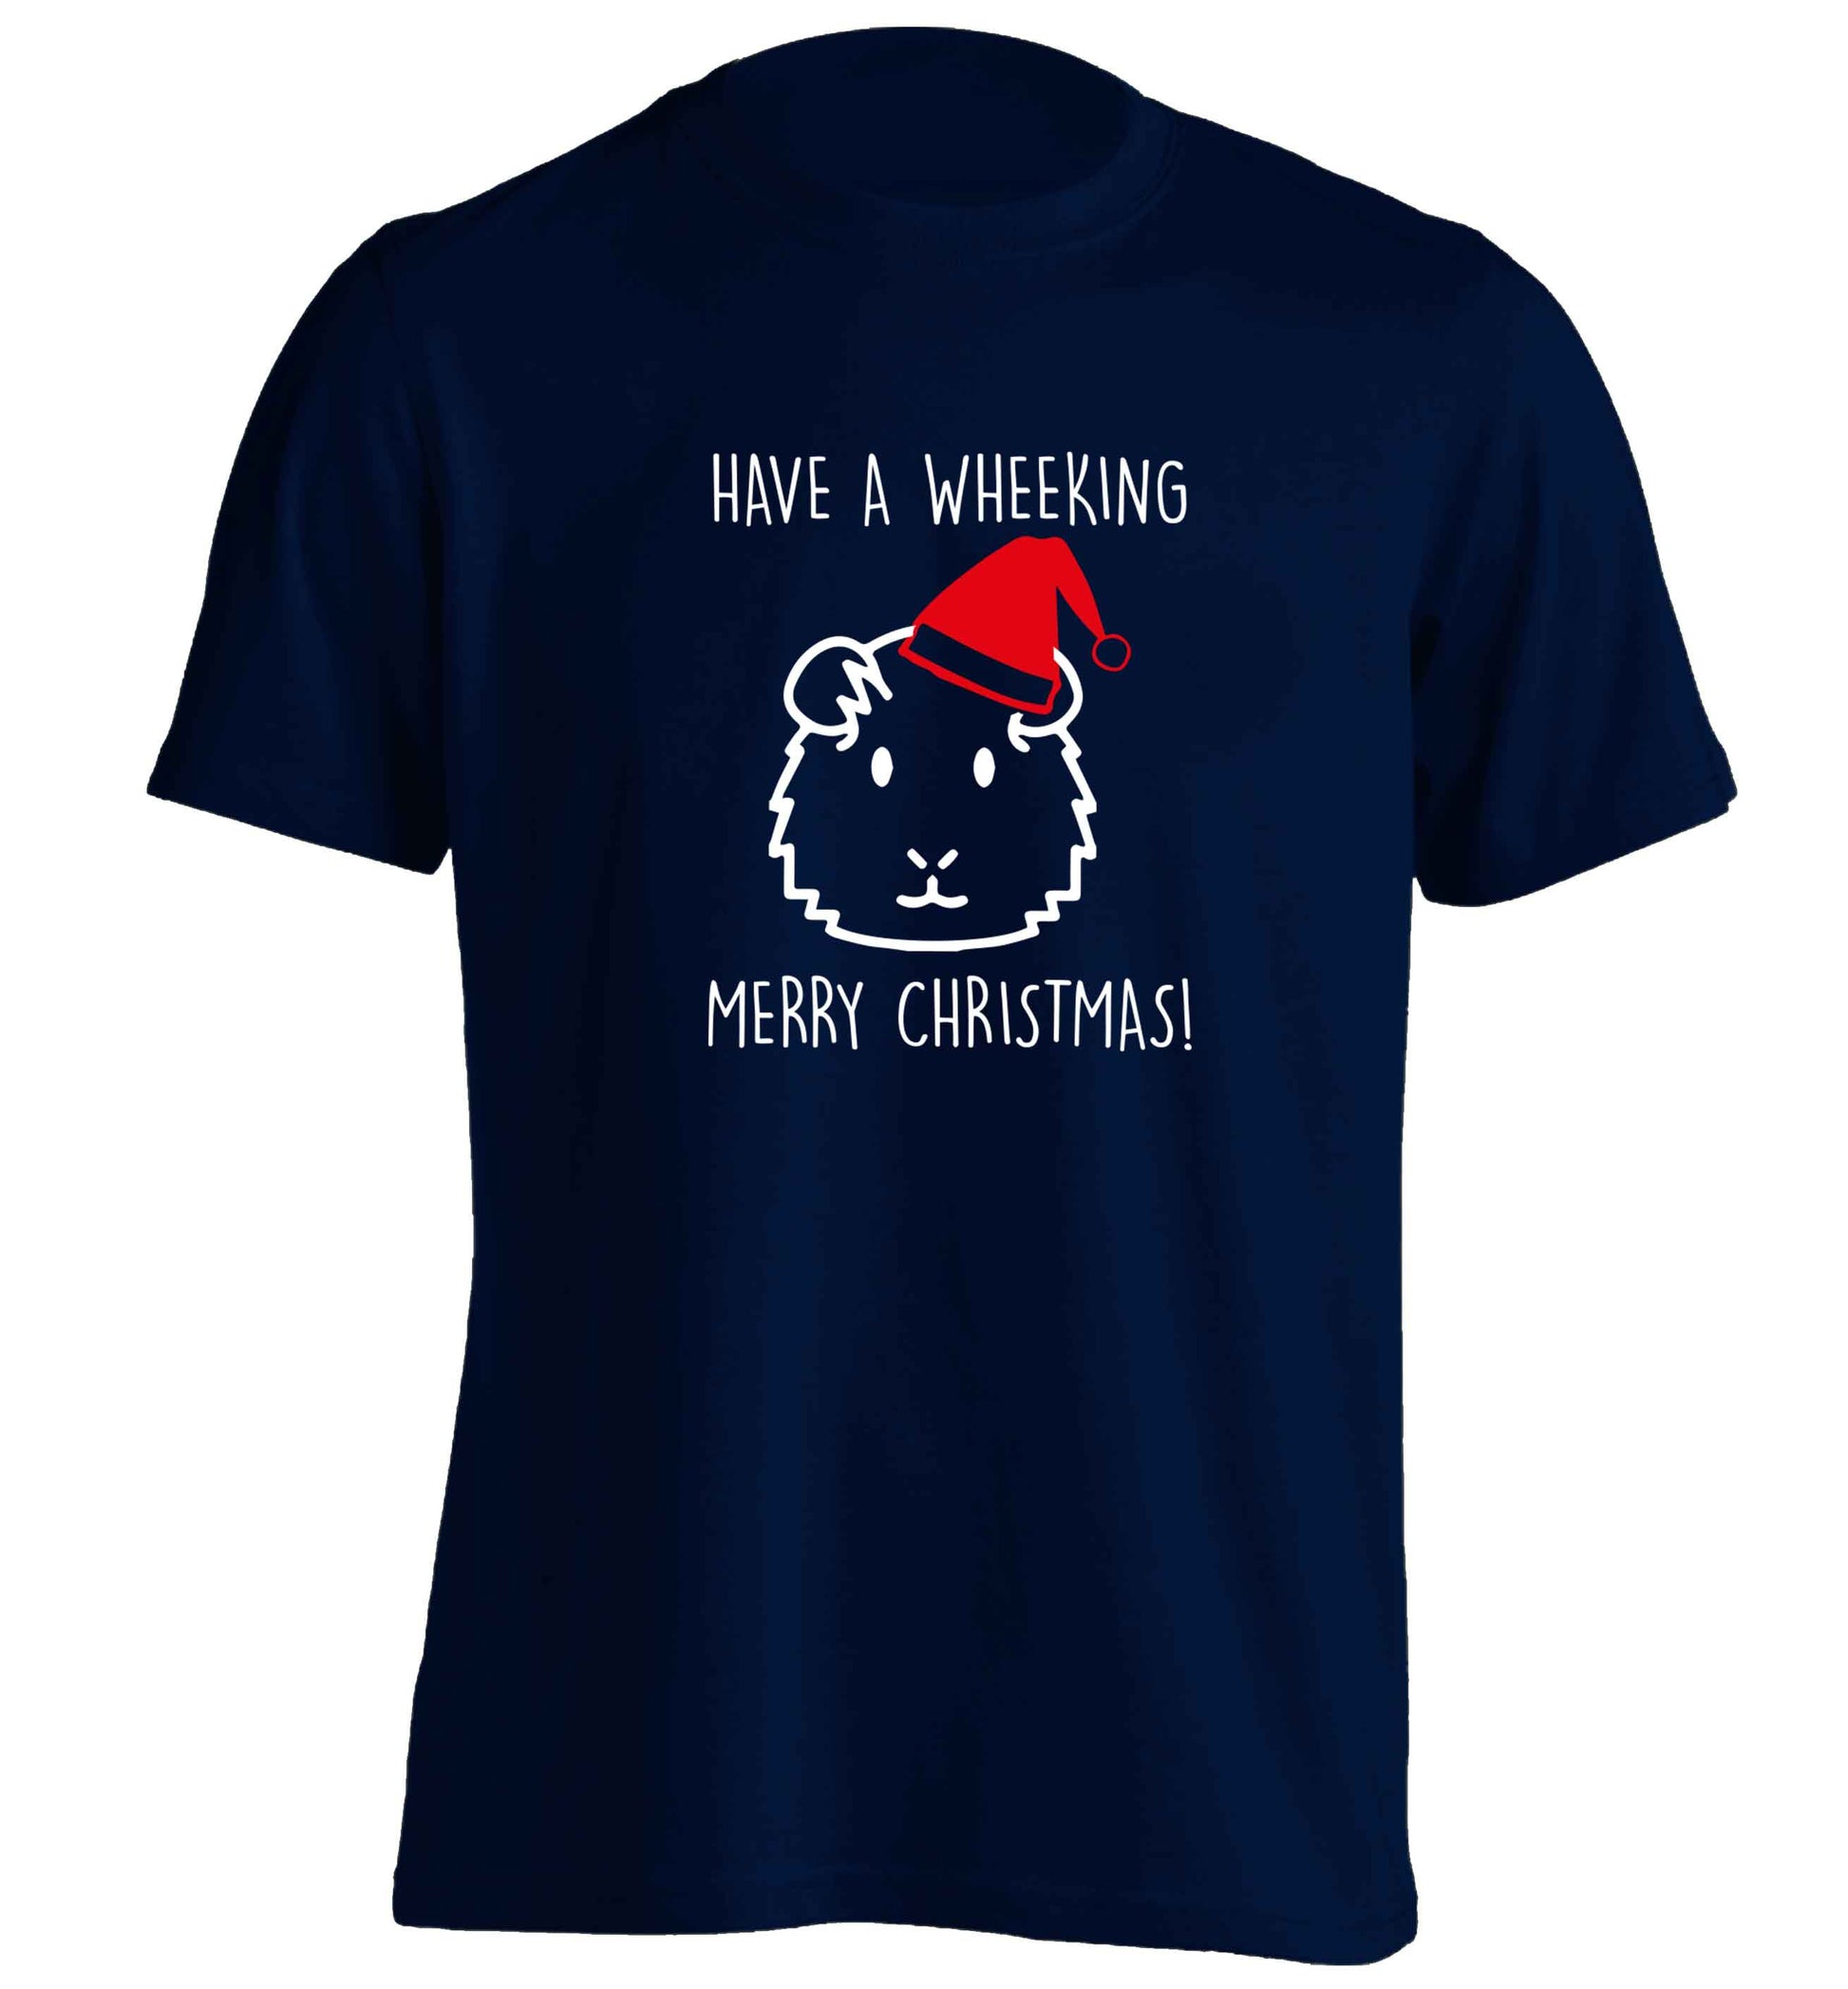 Have a wheeking merry Christmas adults unisex navy Tshirt 2XL